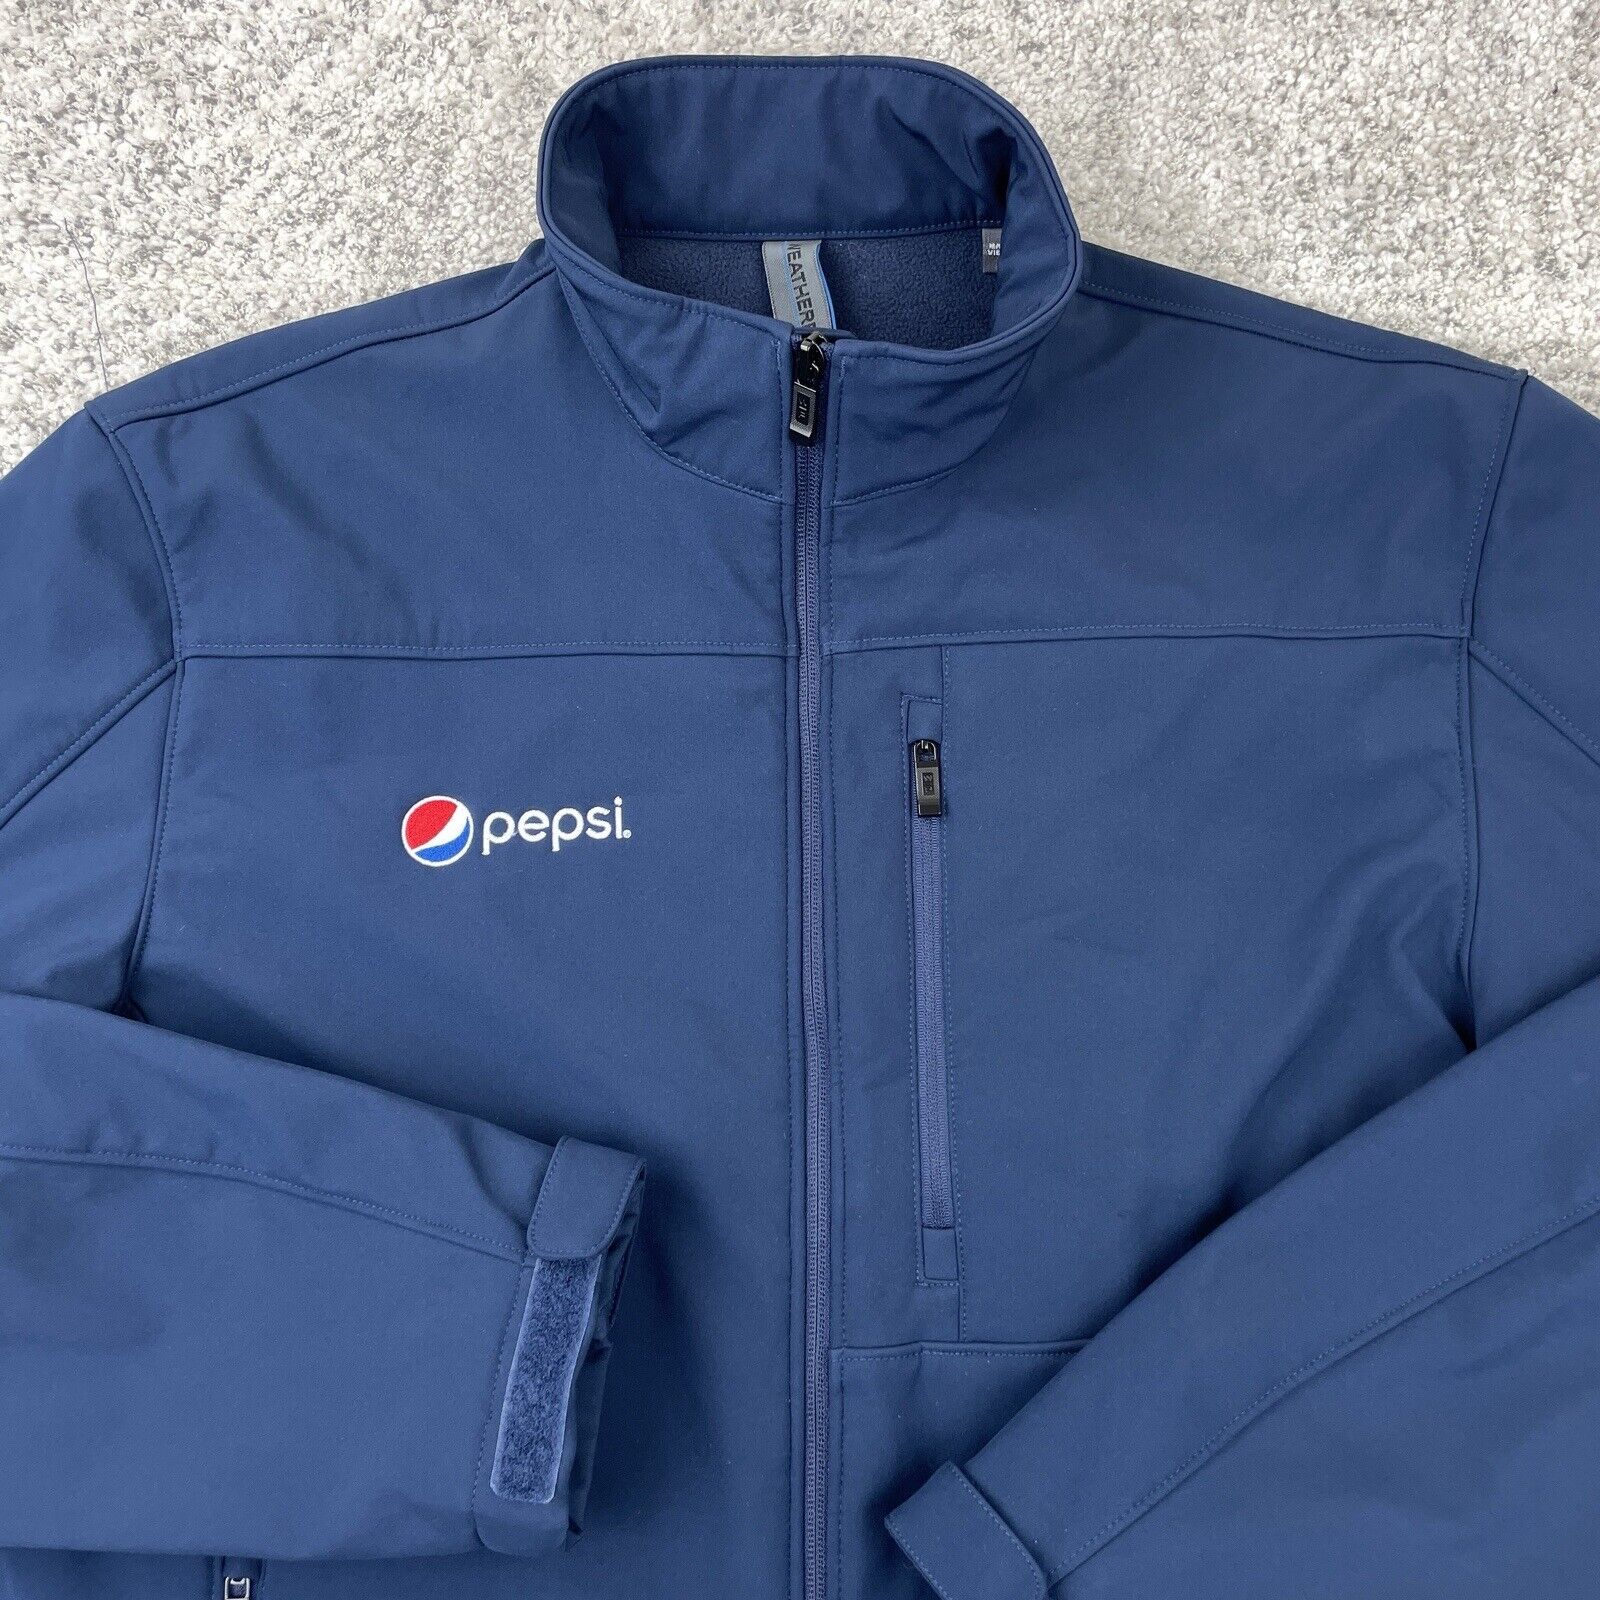 Pepsi Jacket Mens Large Workwear Logo Blue Softshell Corporate Weatherproof GUC